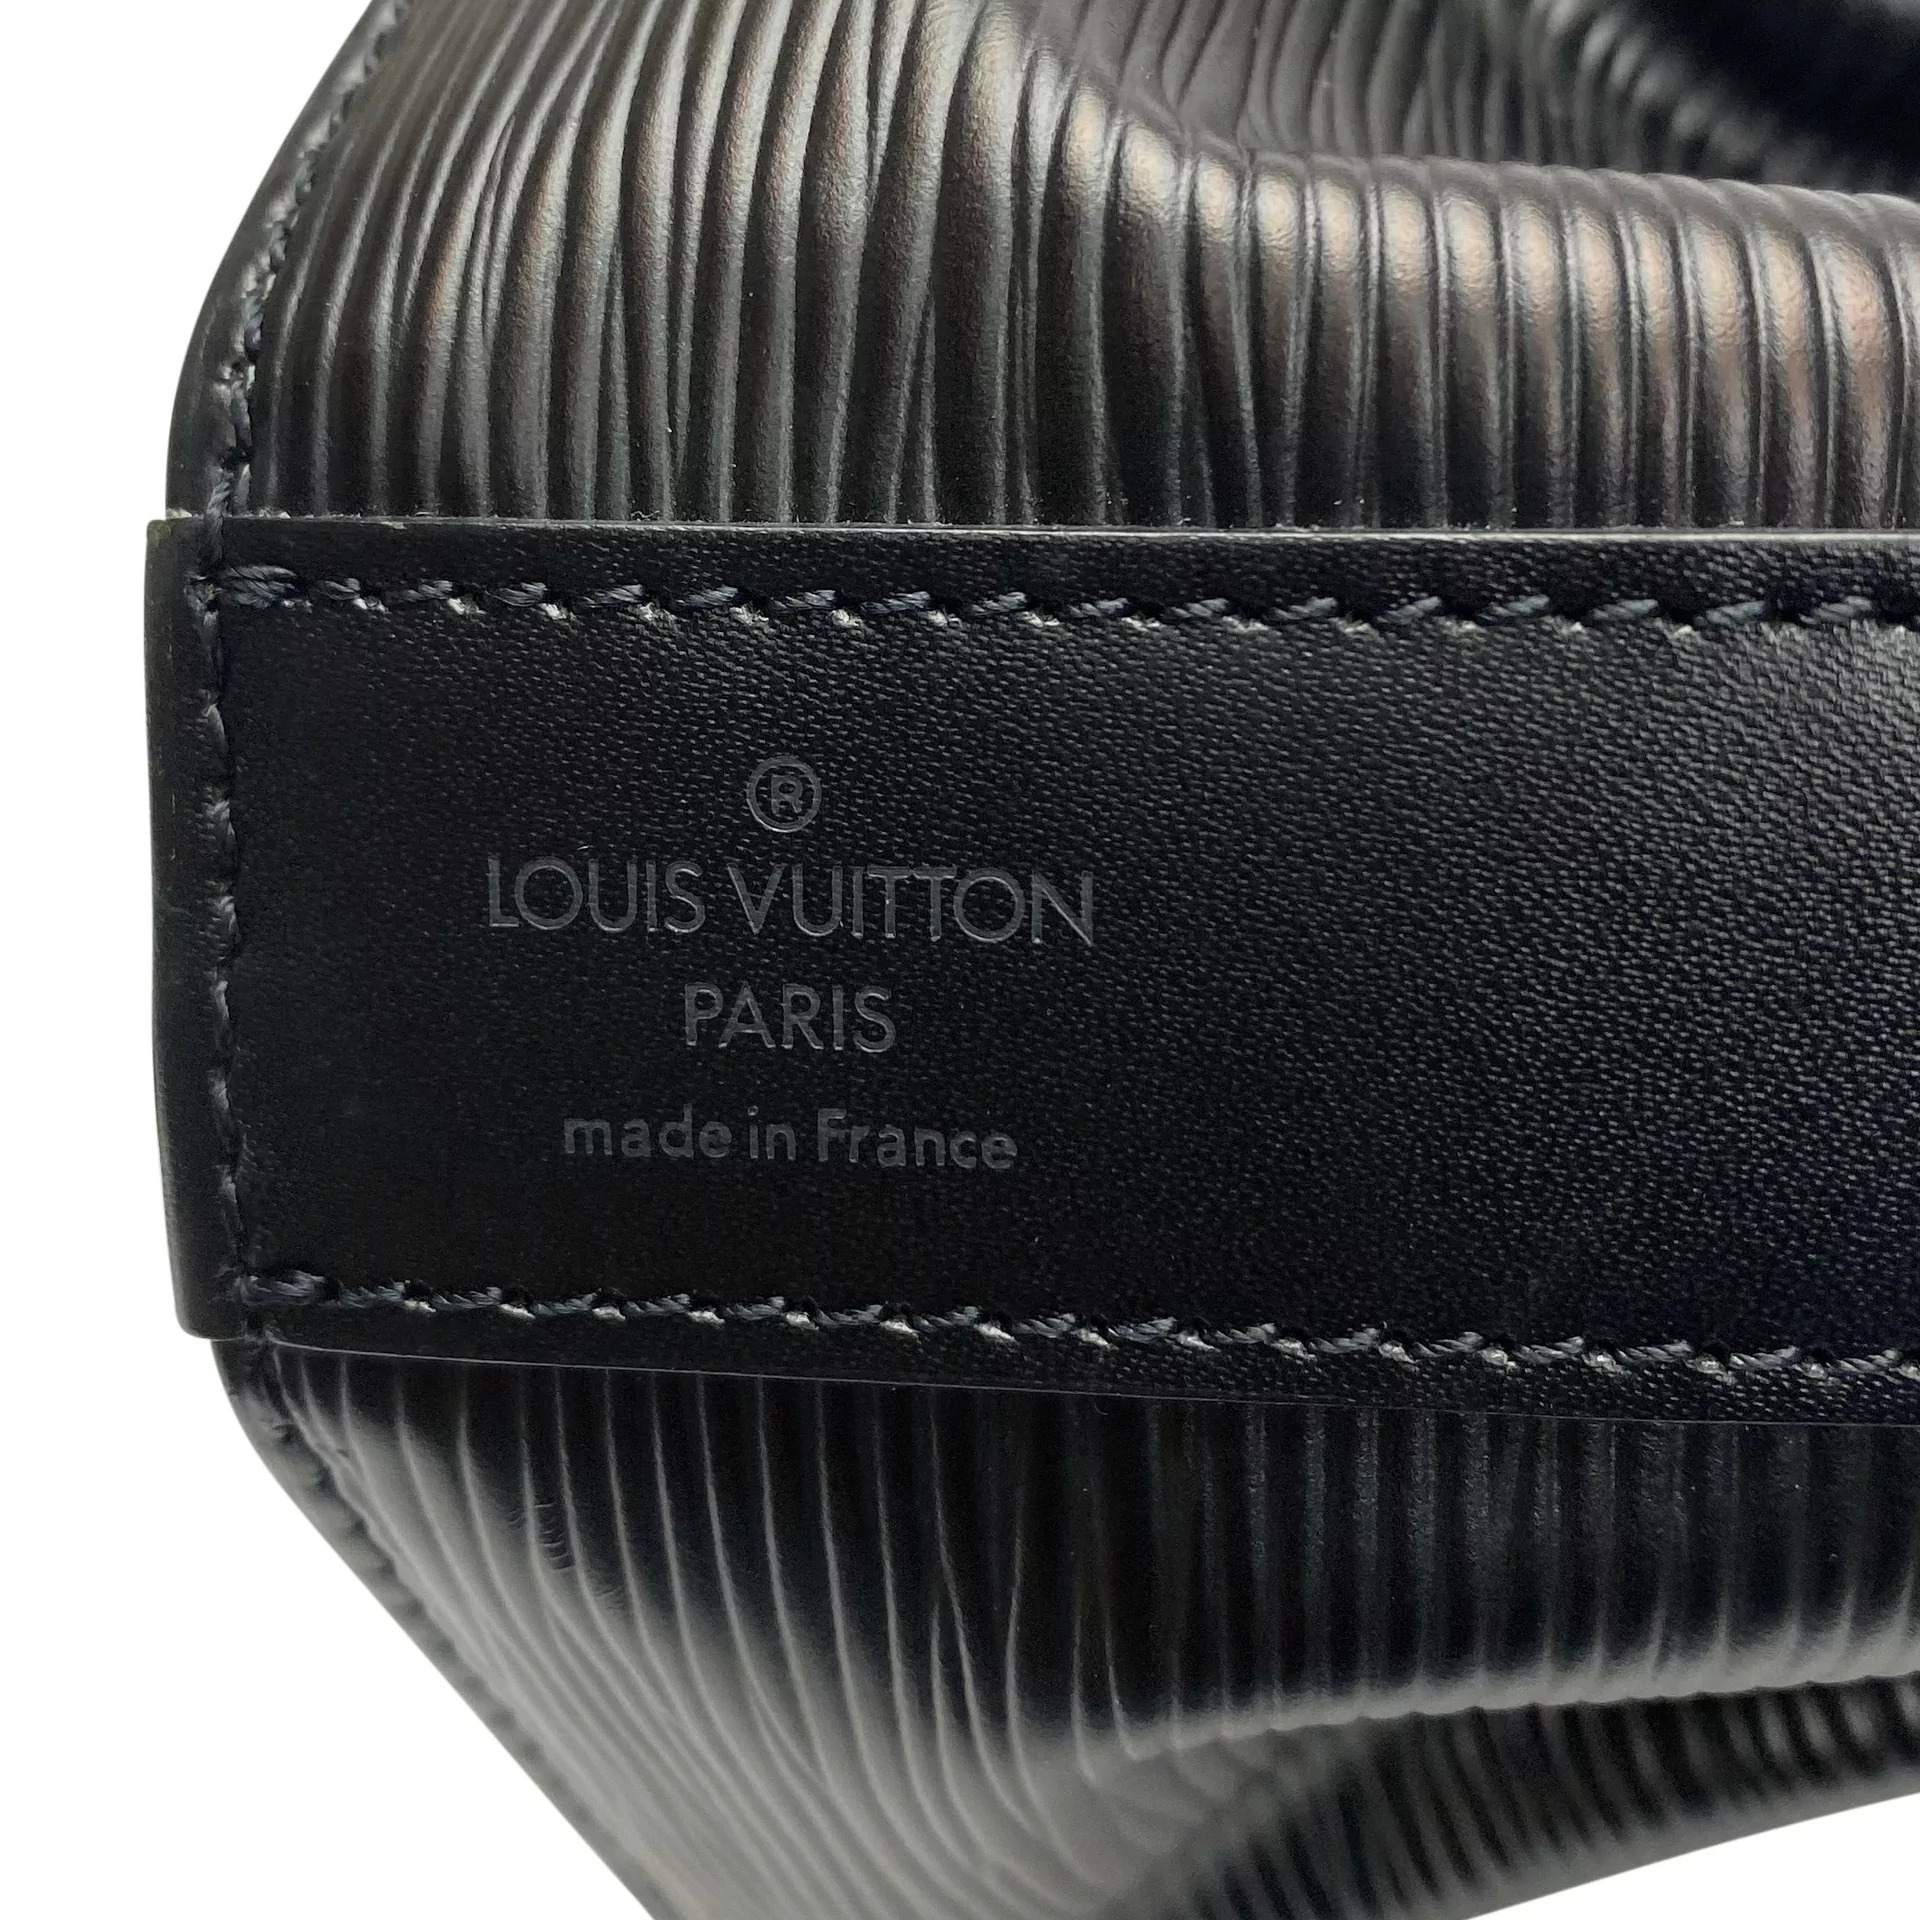 Bolsa Louis Vuitton Sac D'Epaule PM Preta